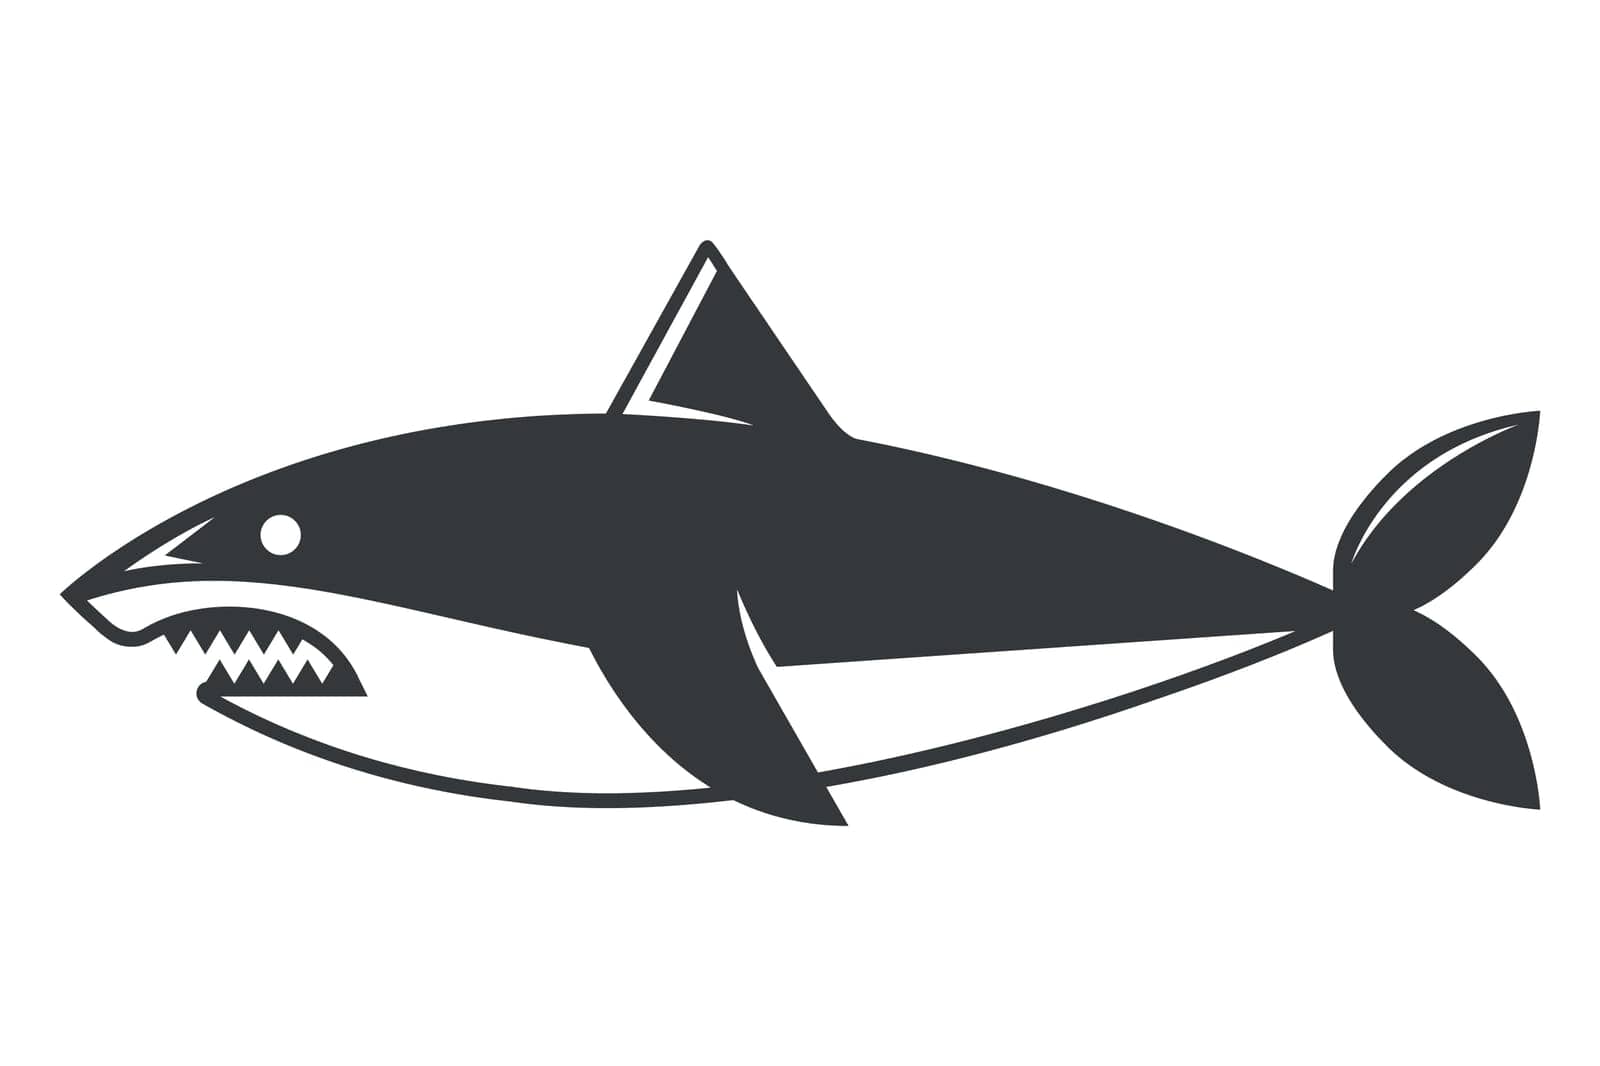 black dangerous shark icon isolated on white background. by PlutusART